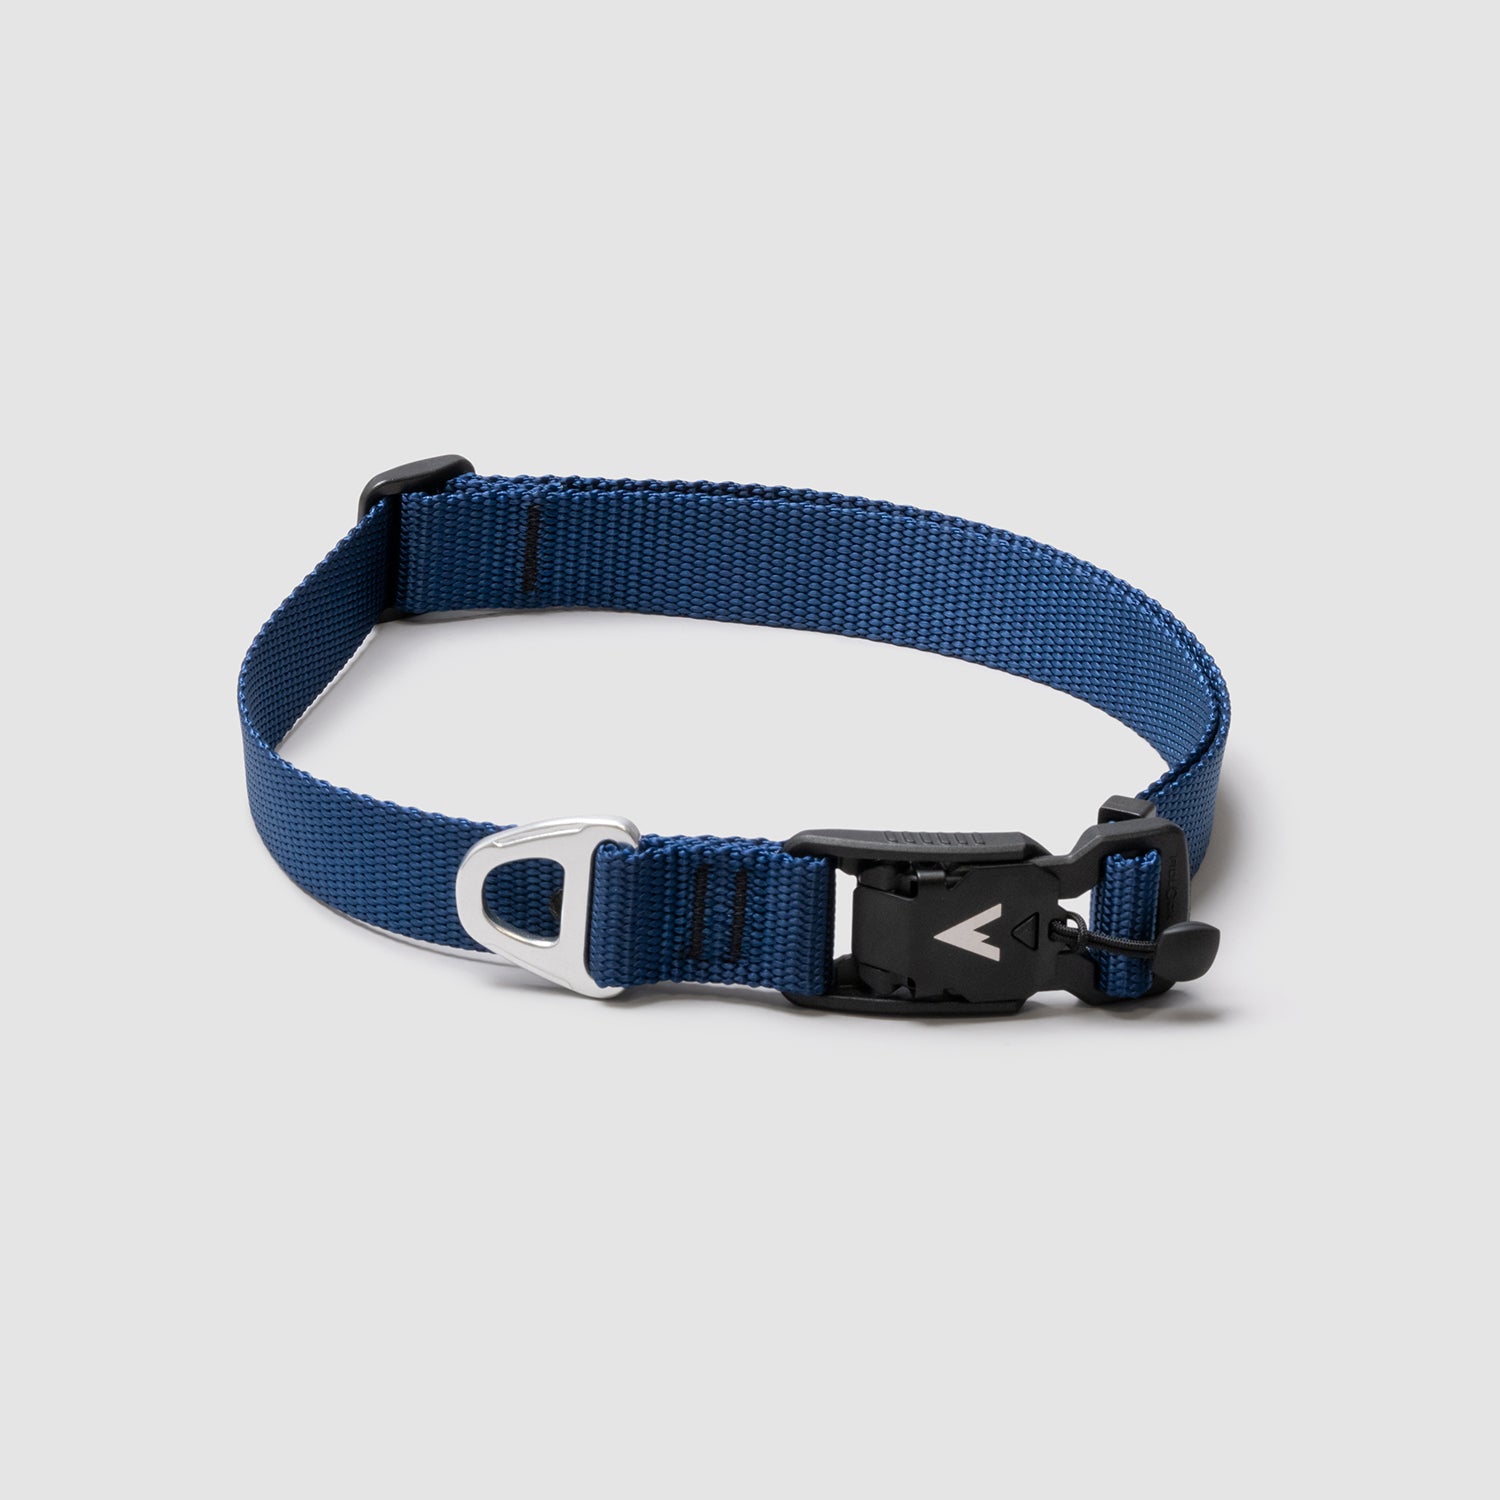 Lifetime Collars® - Lifetime Warranty Dog Collars Handmade in